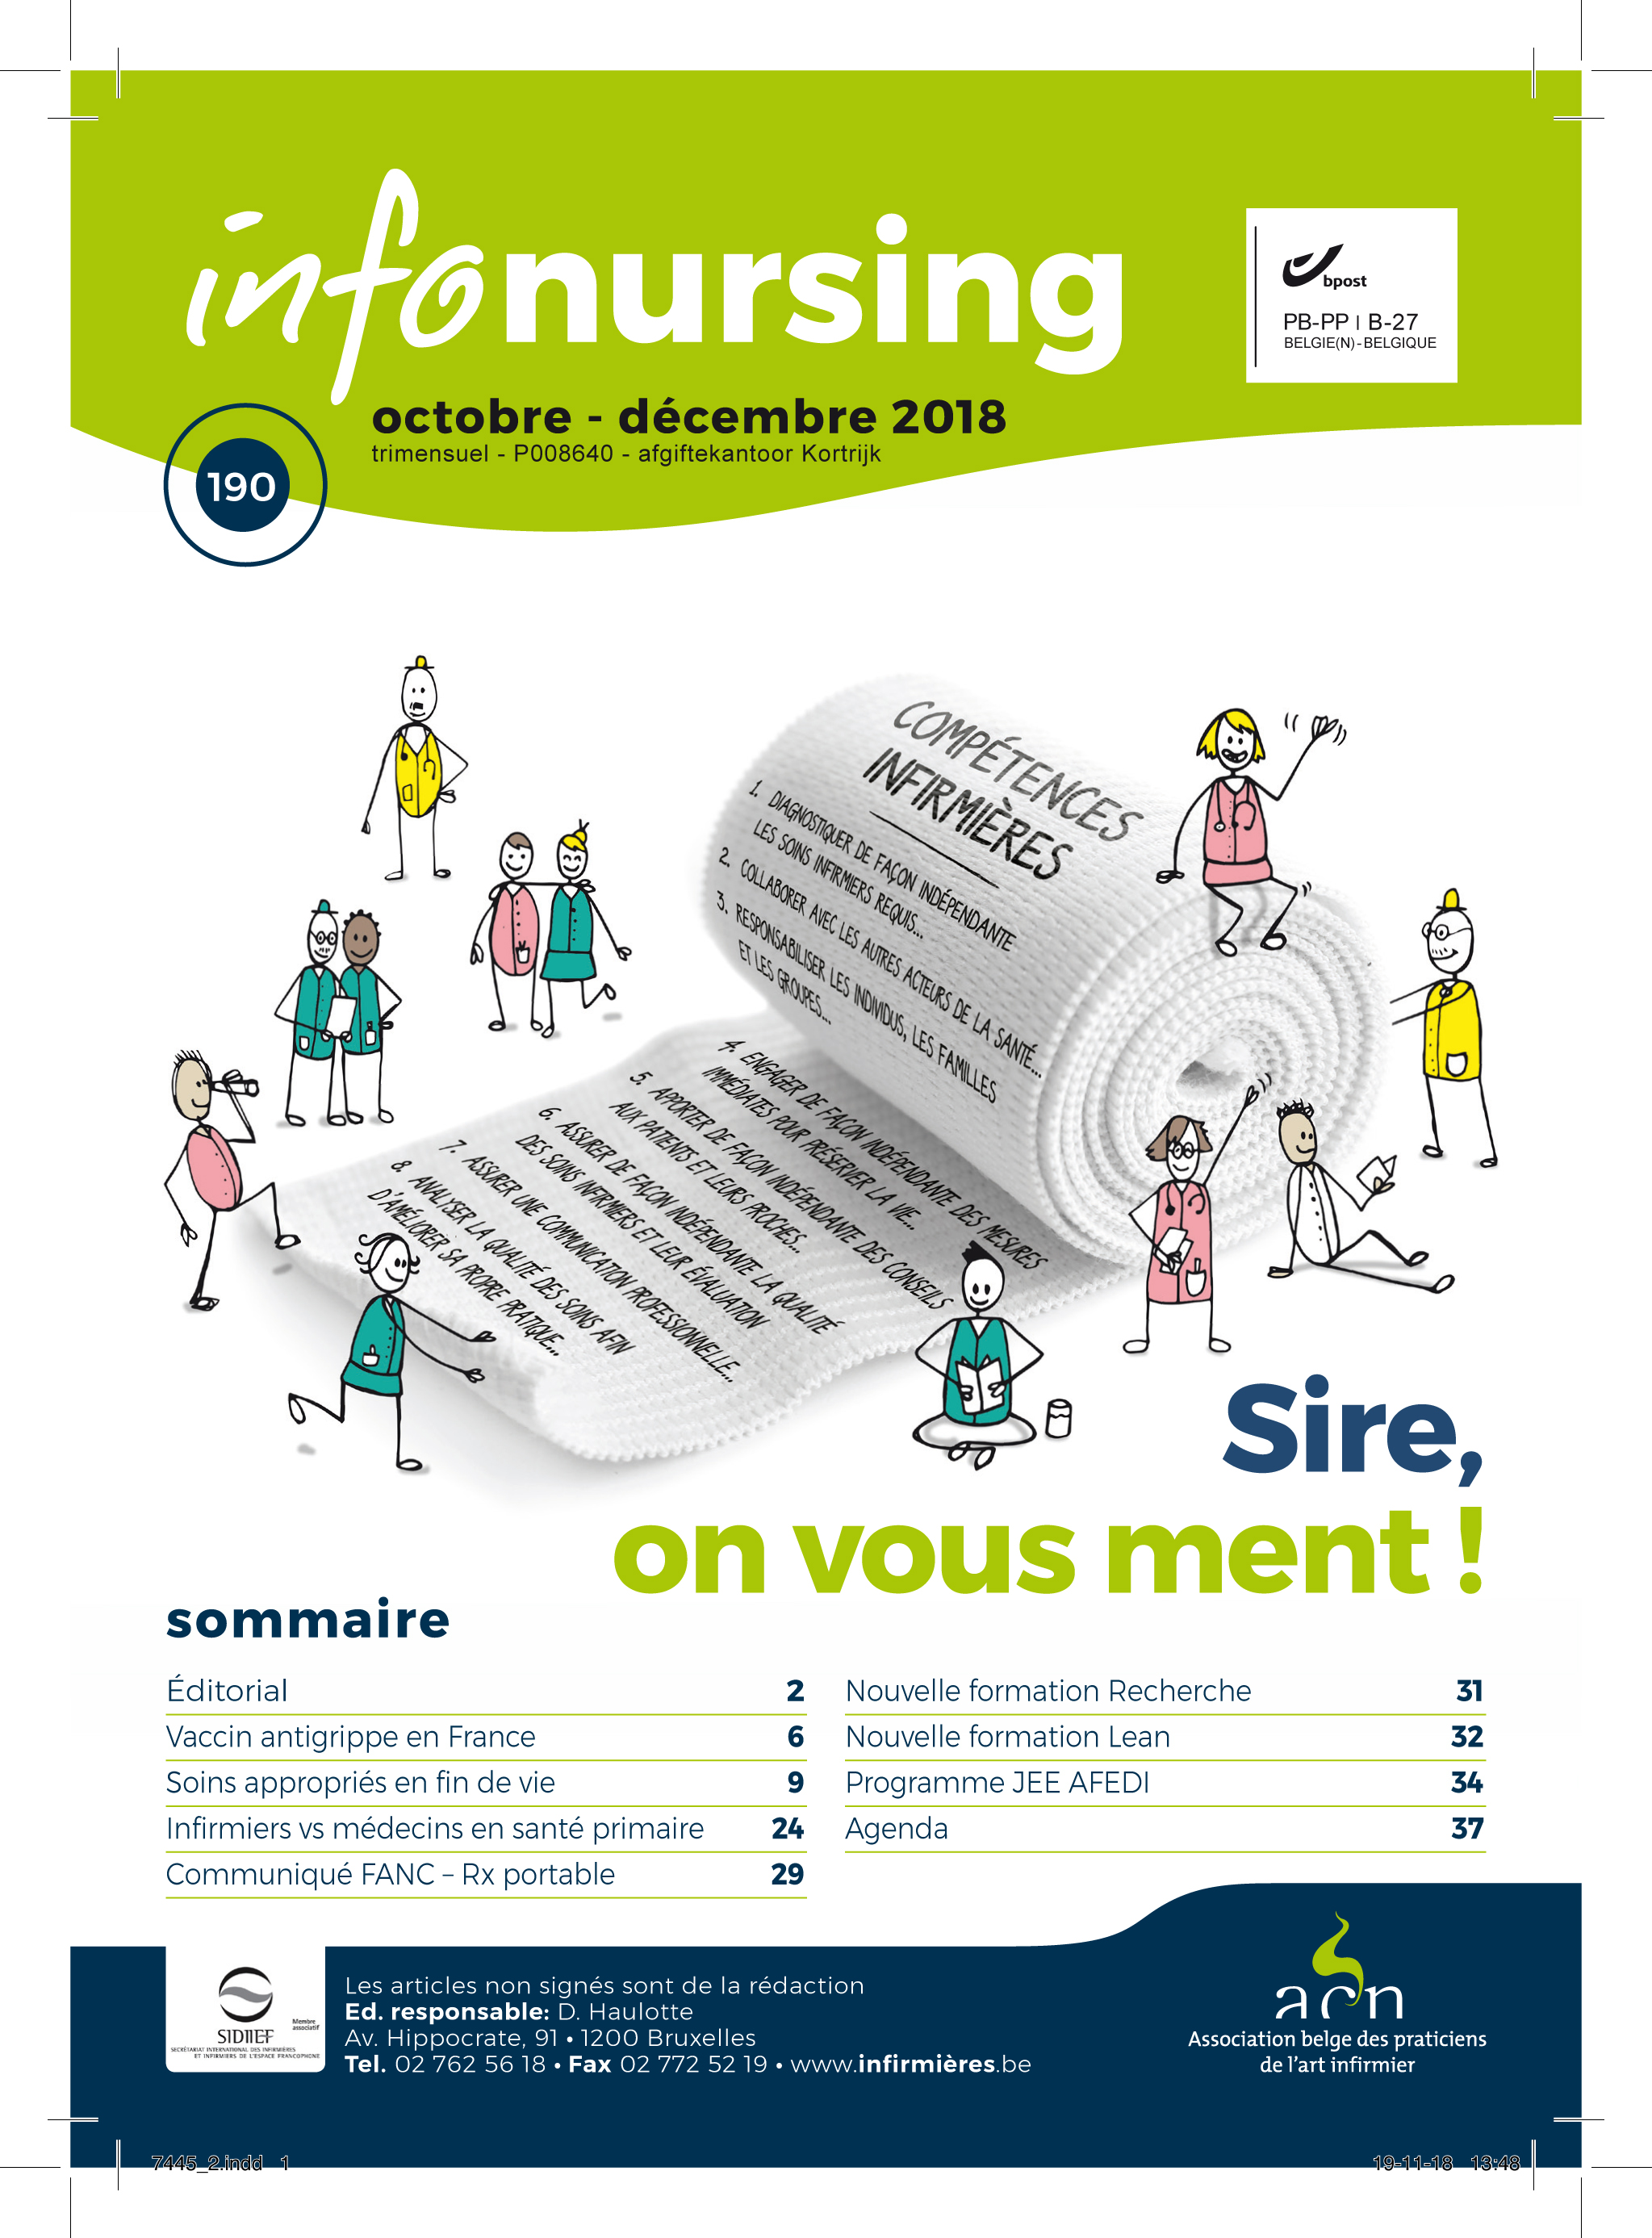 Edito Info-Nursing 190 : Sire on vous ment !